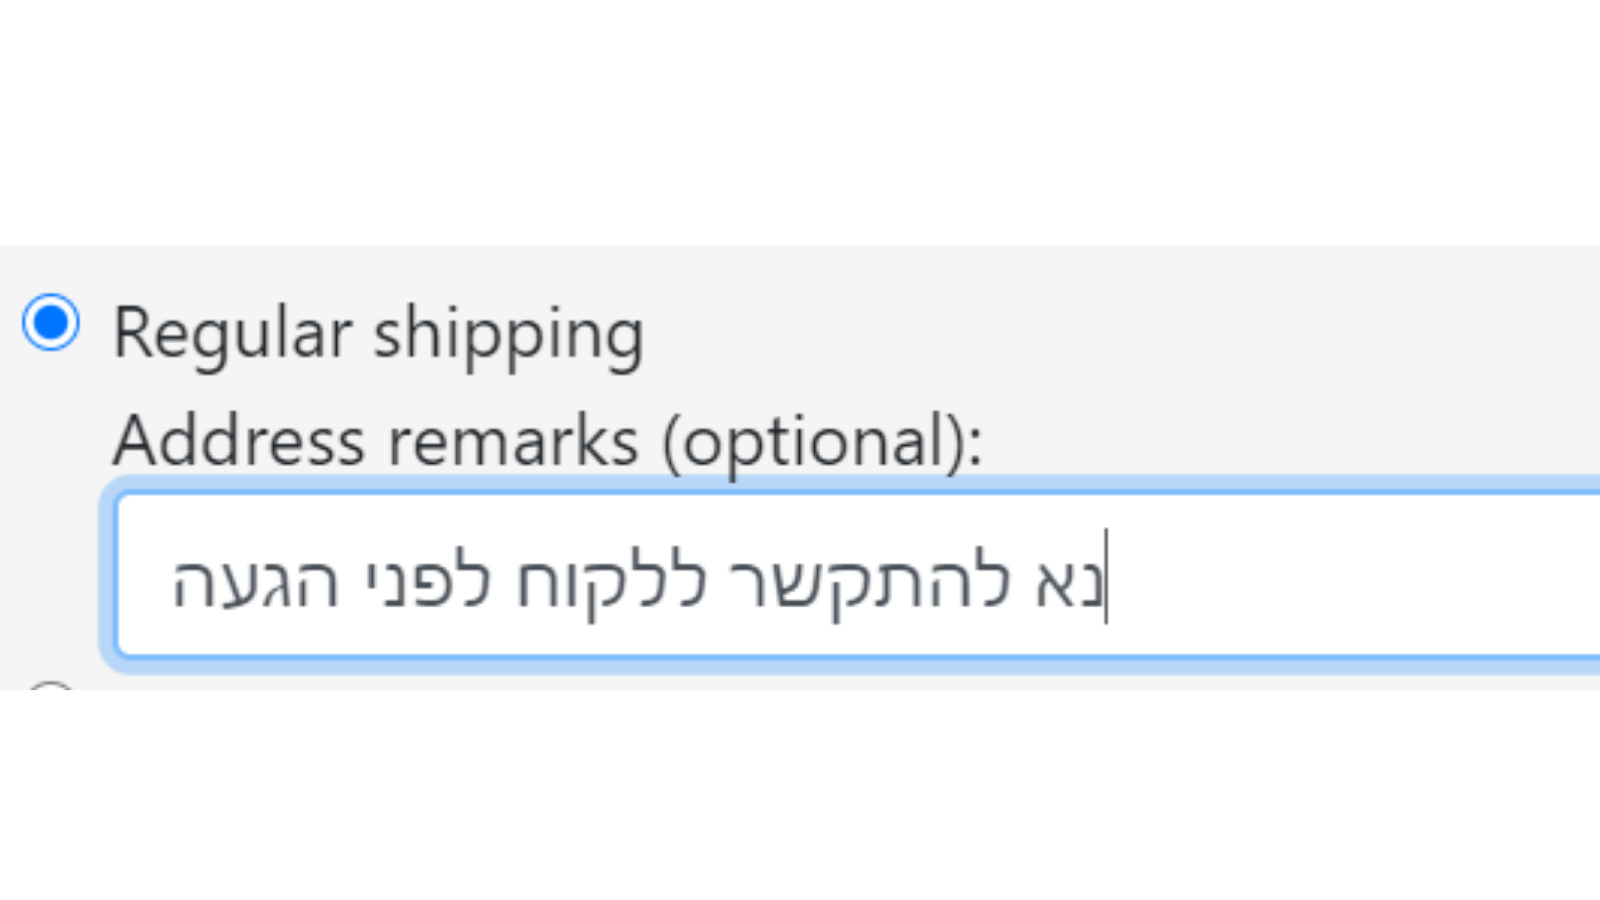 Add remarks for regular shipments